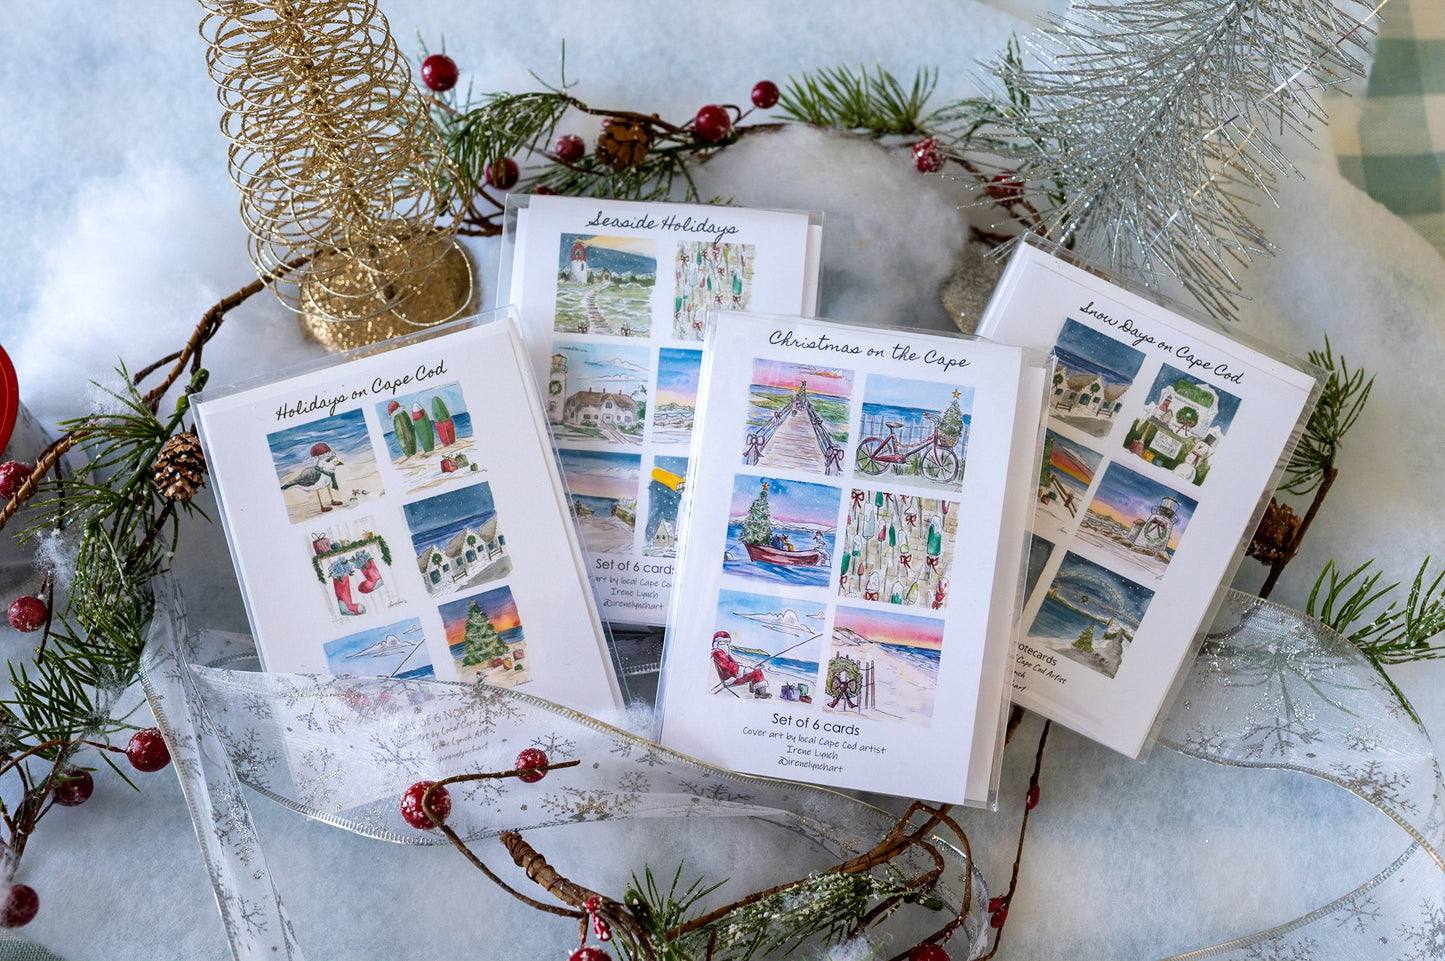 "Holidays on Cape Cod" Holiday Card Box Set - Wholesale